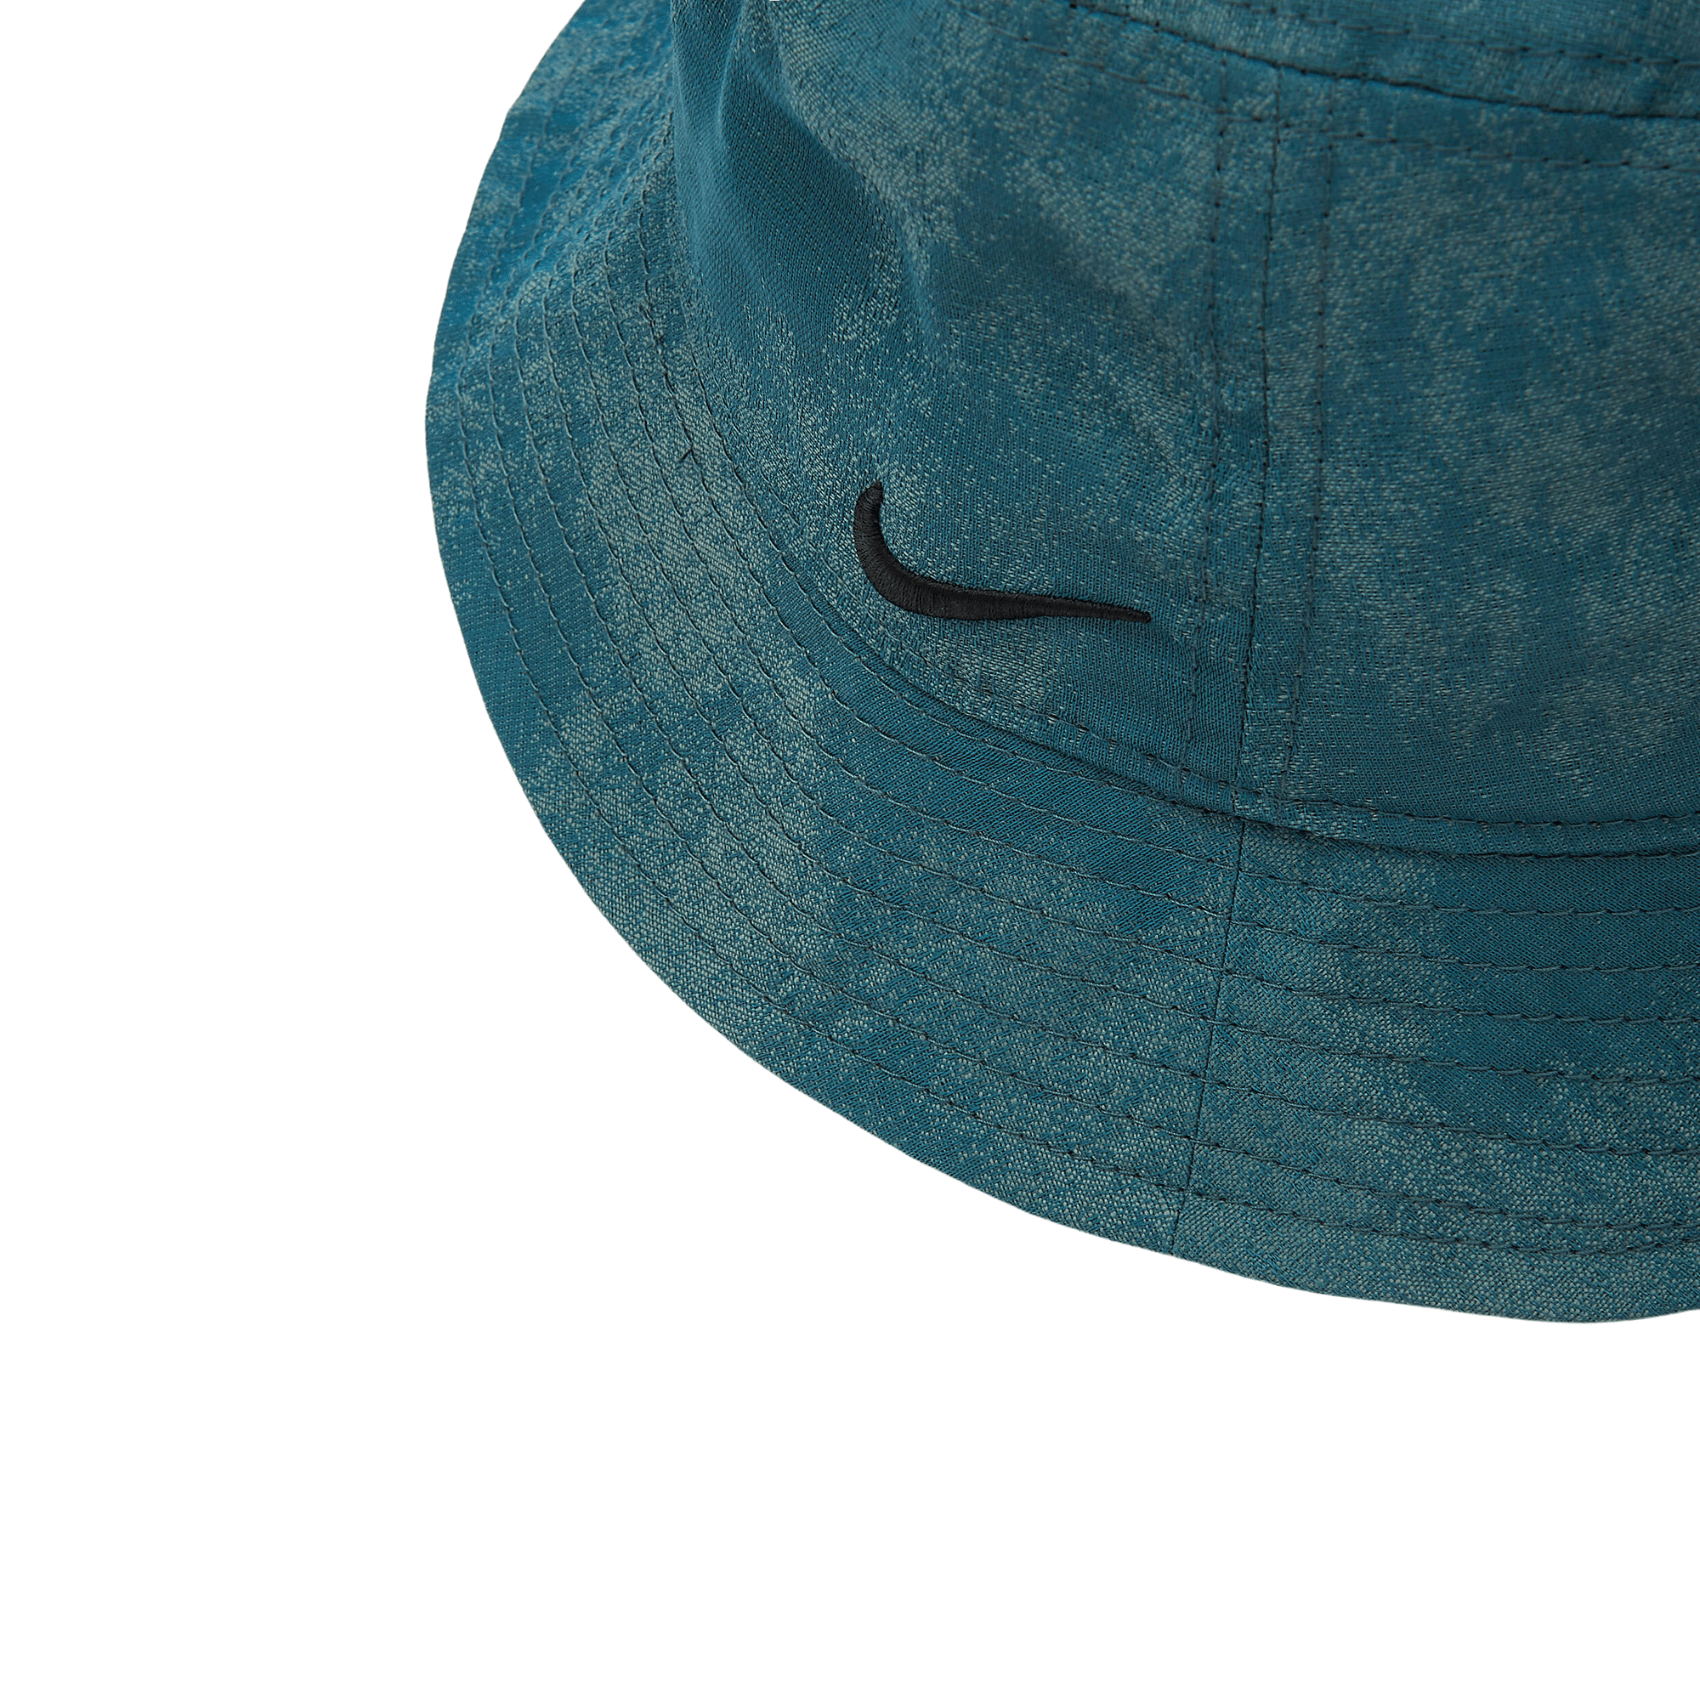 NRG Unisex Bucket Hat - Hasta Tie-Dye